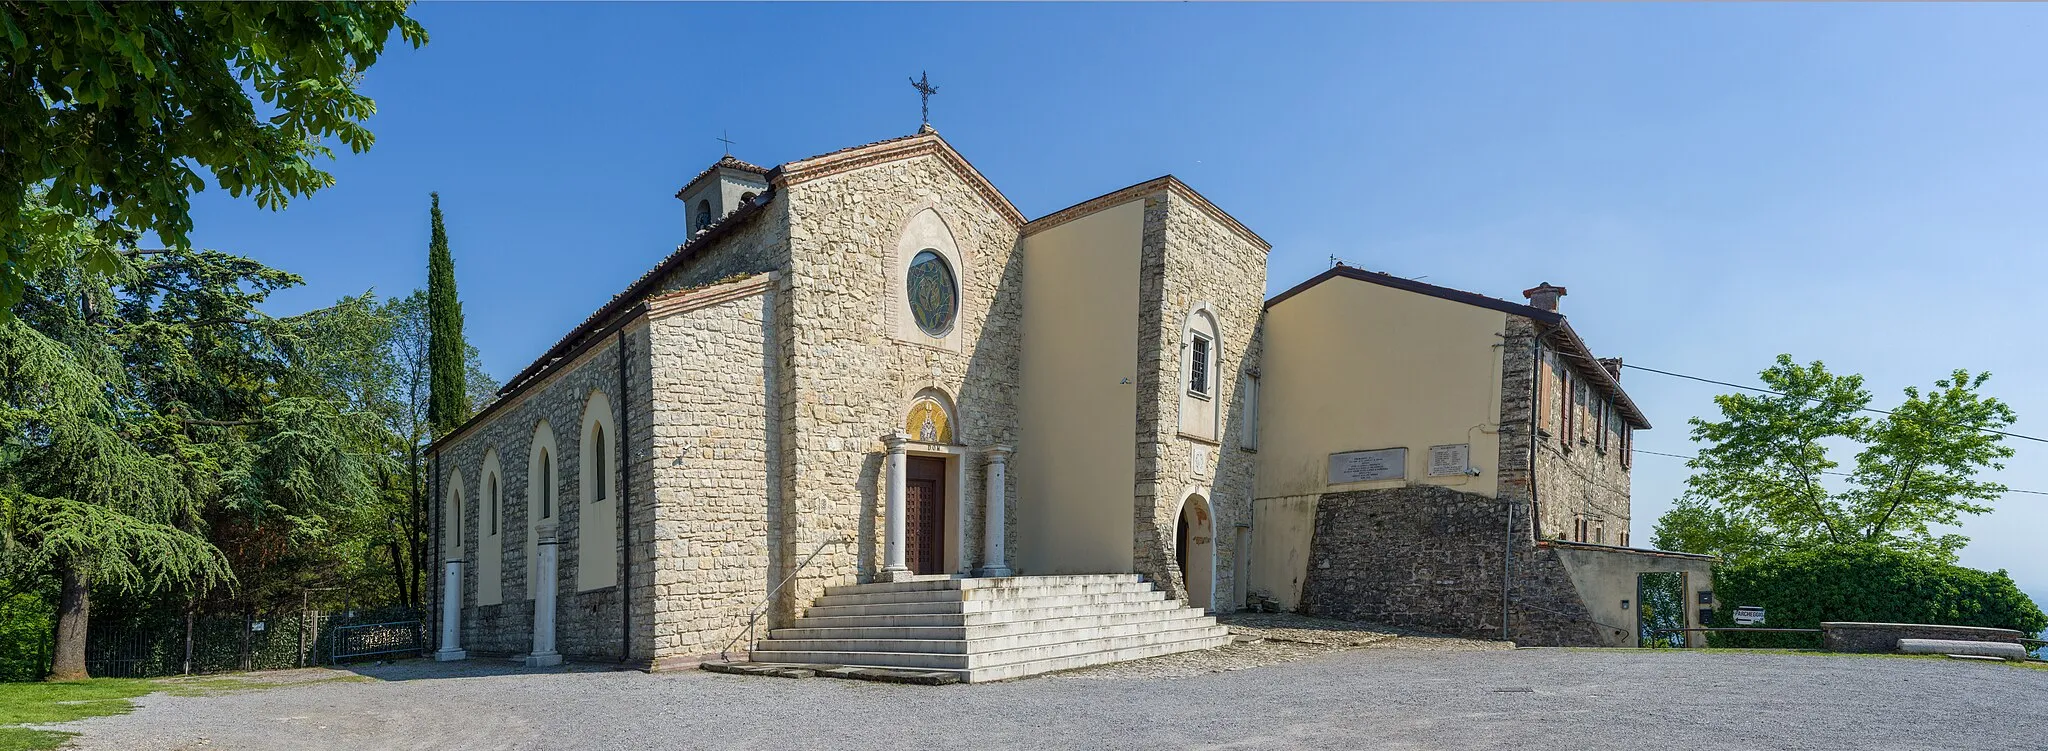 Photo showing: The Chiesa San Gottardo church in Brescia.